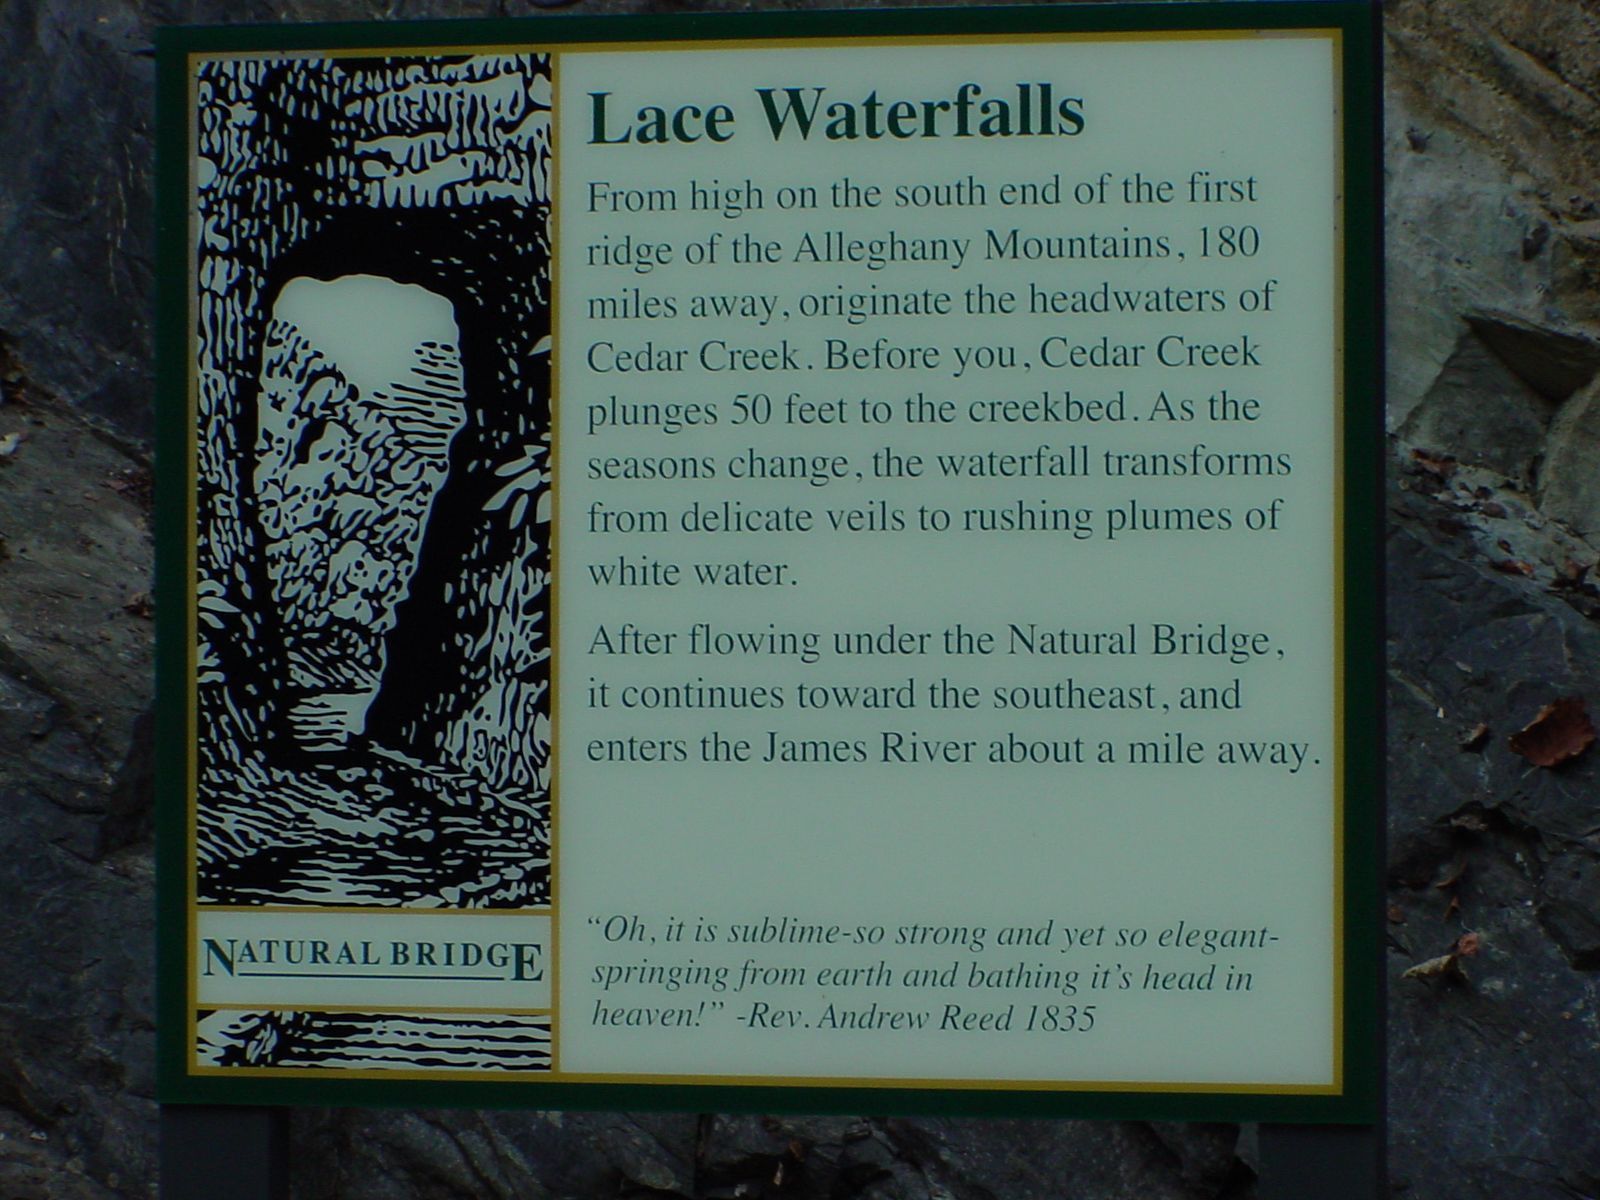 About Lace Waterfalls